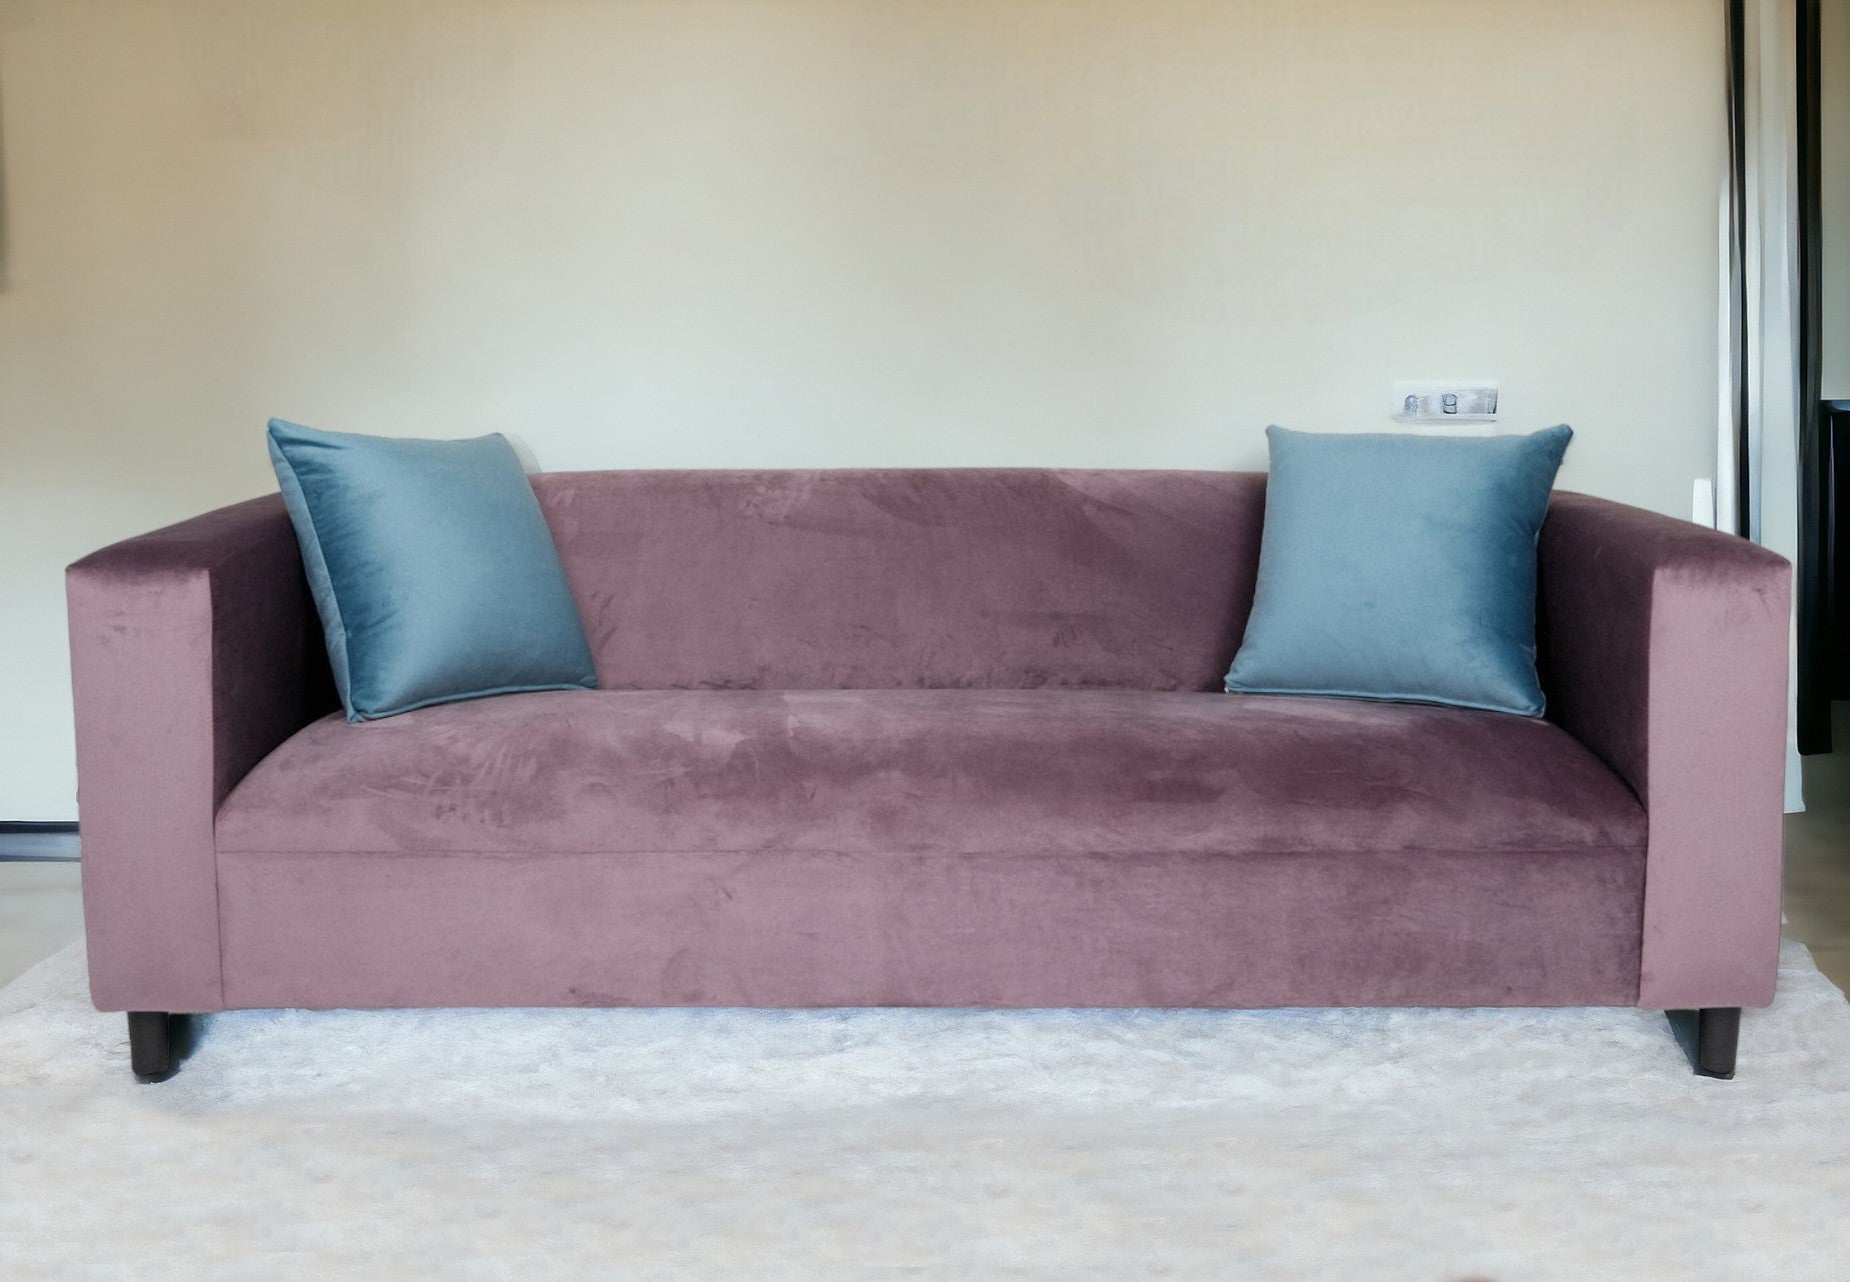 72" Lavender Velvet And Black Sofa With Toss Pillows